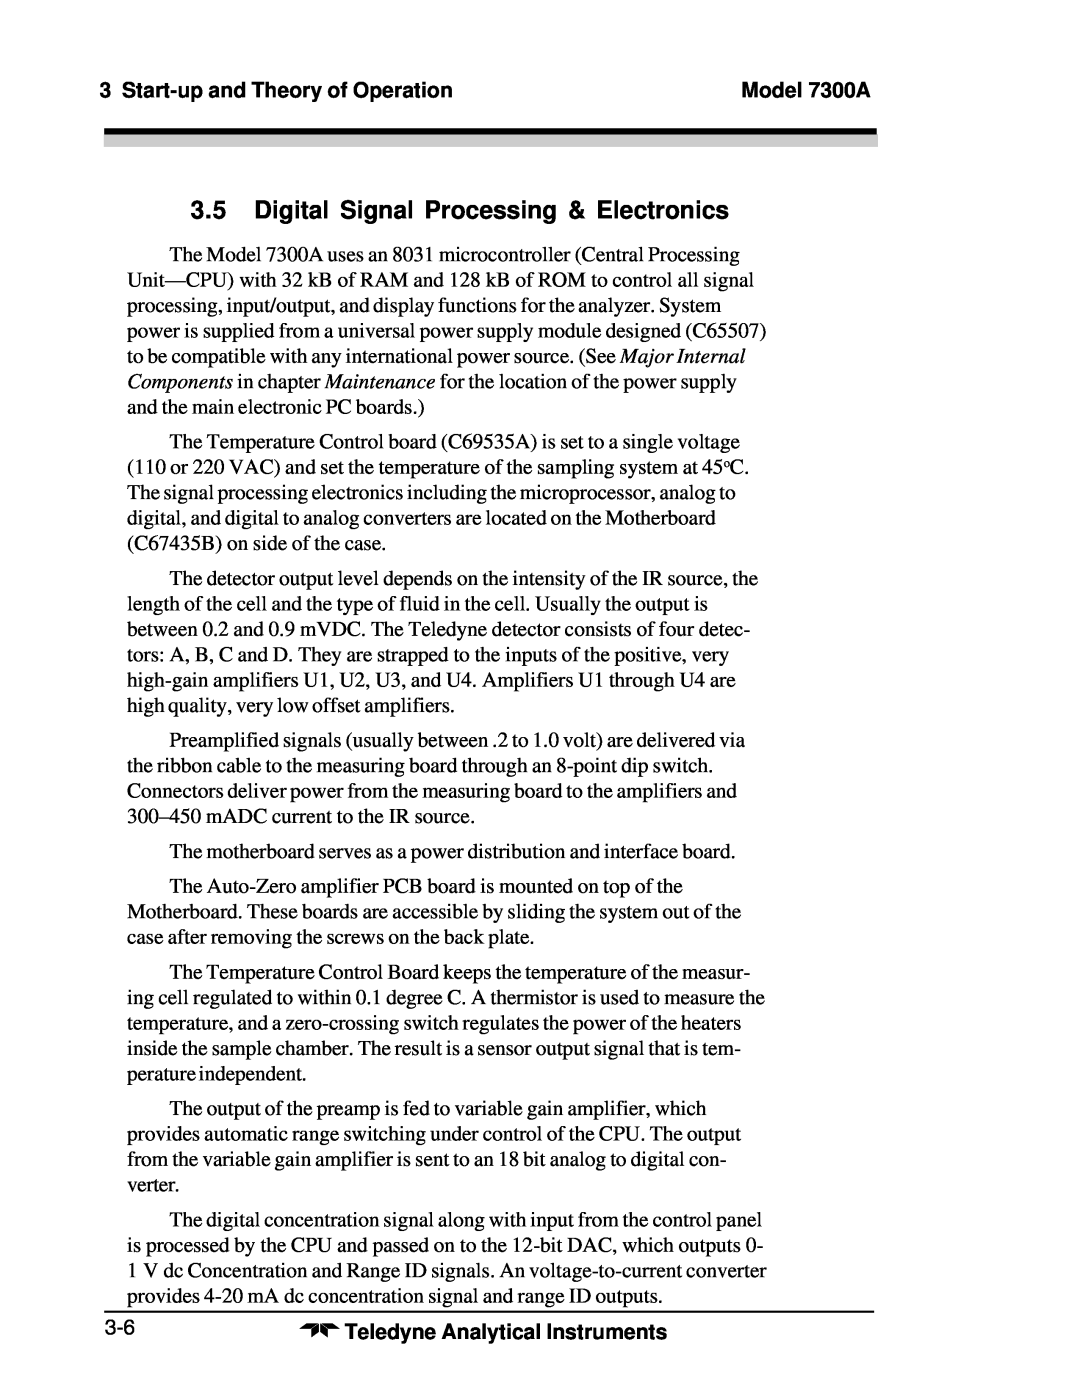 Teledyne manual 3.5Digital Signal Processing & Electronics, Start-upand Theory of Operation, Model 7300A 